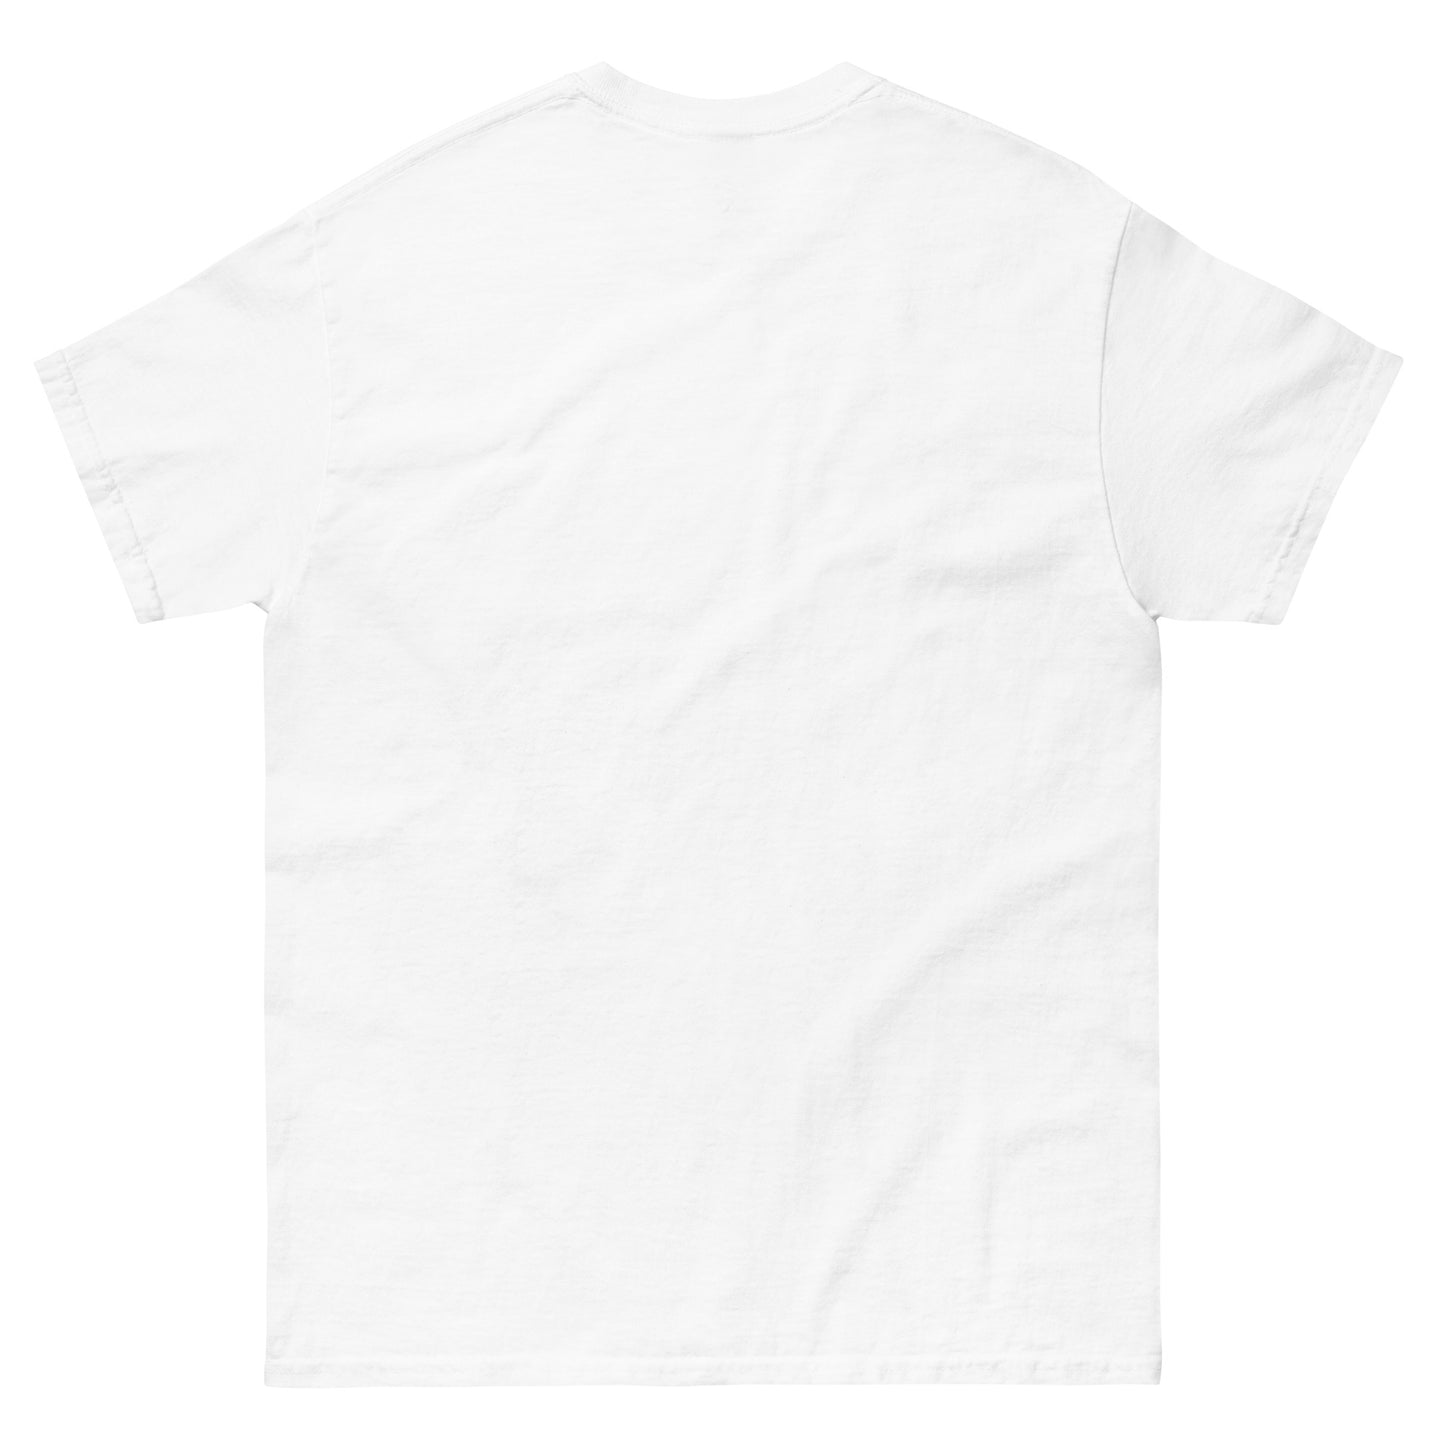 Curb Sweeper Social Club T-Shirt